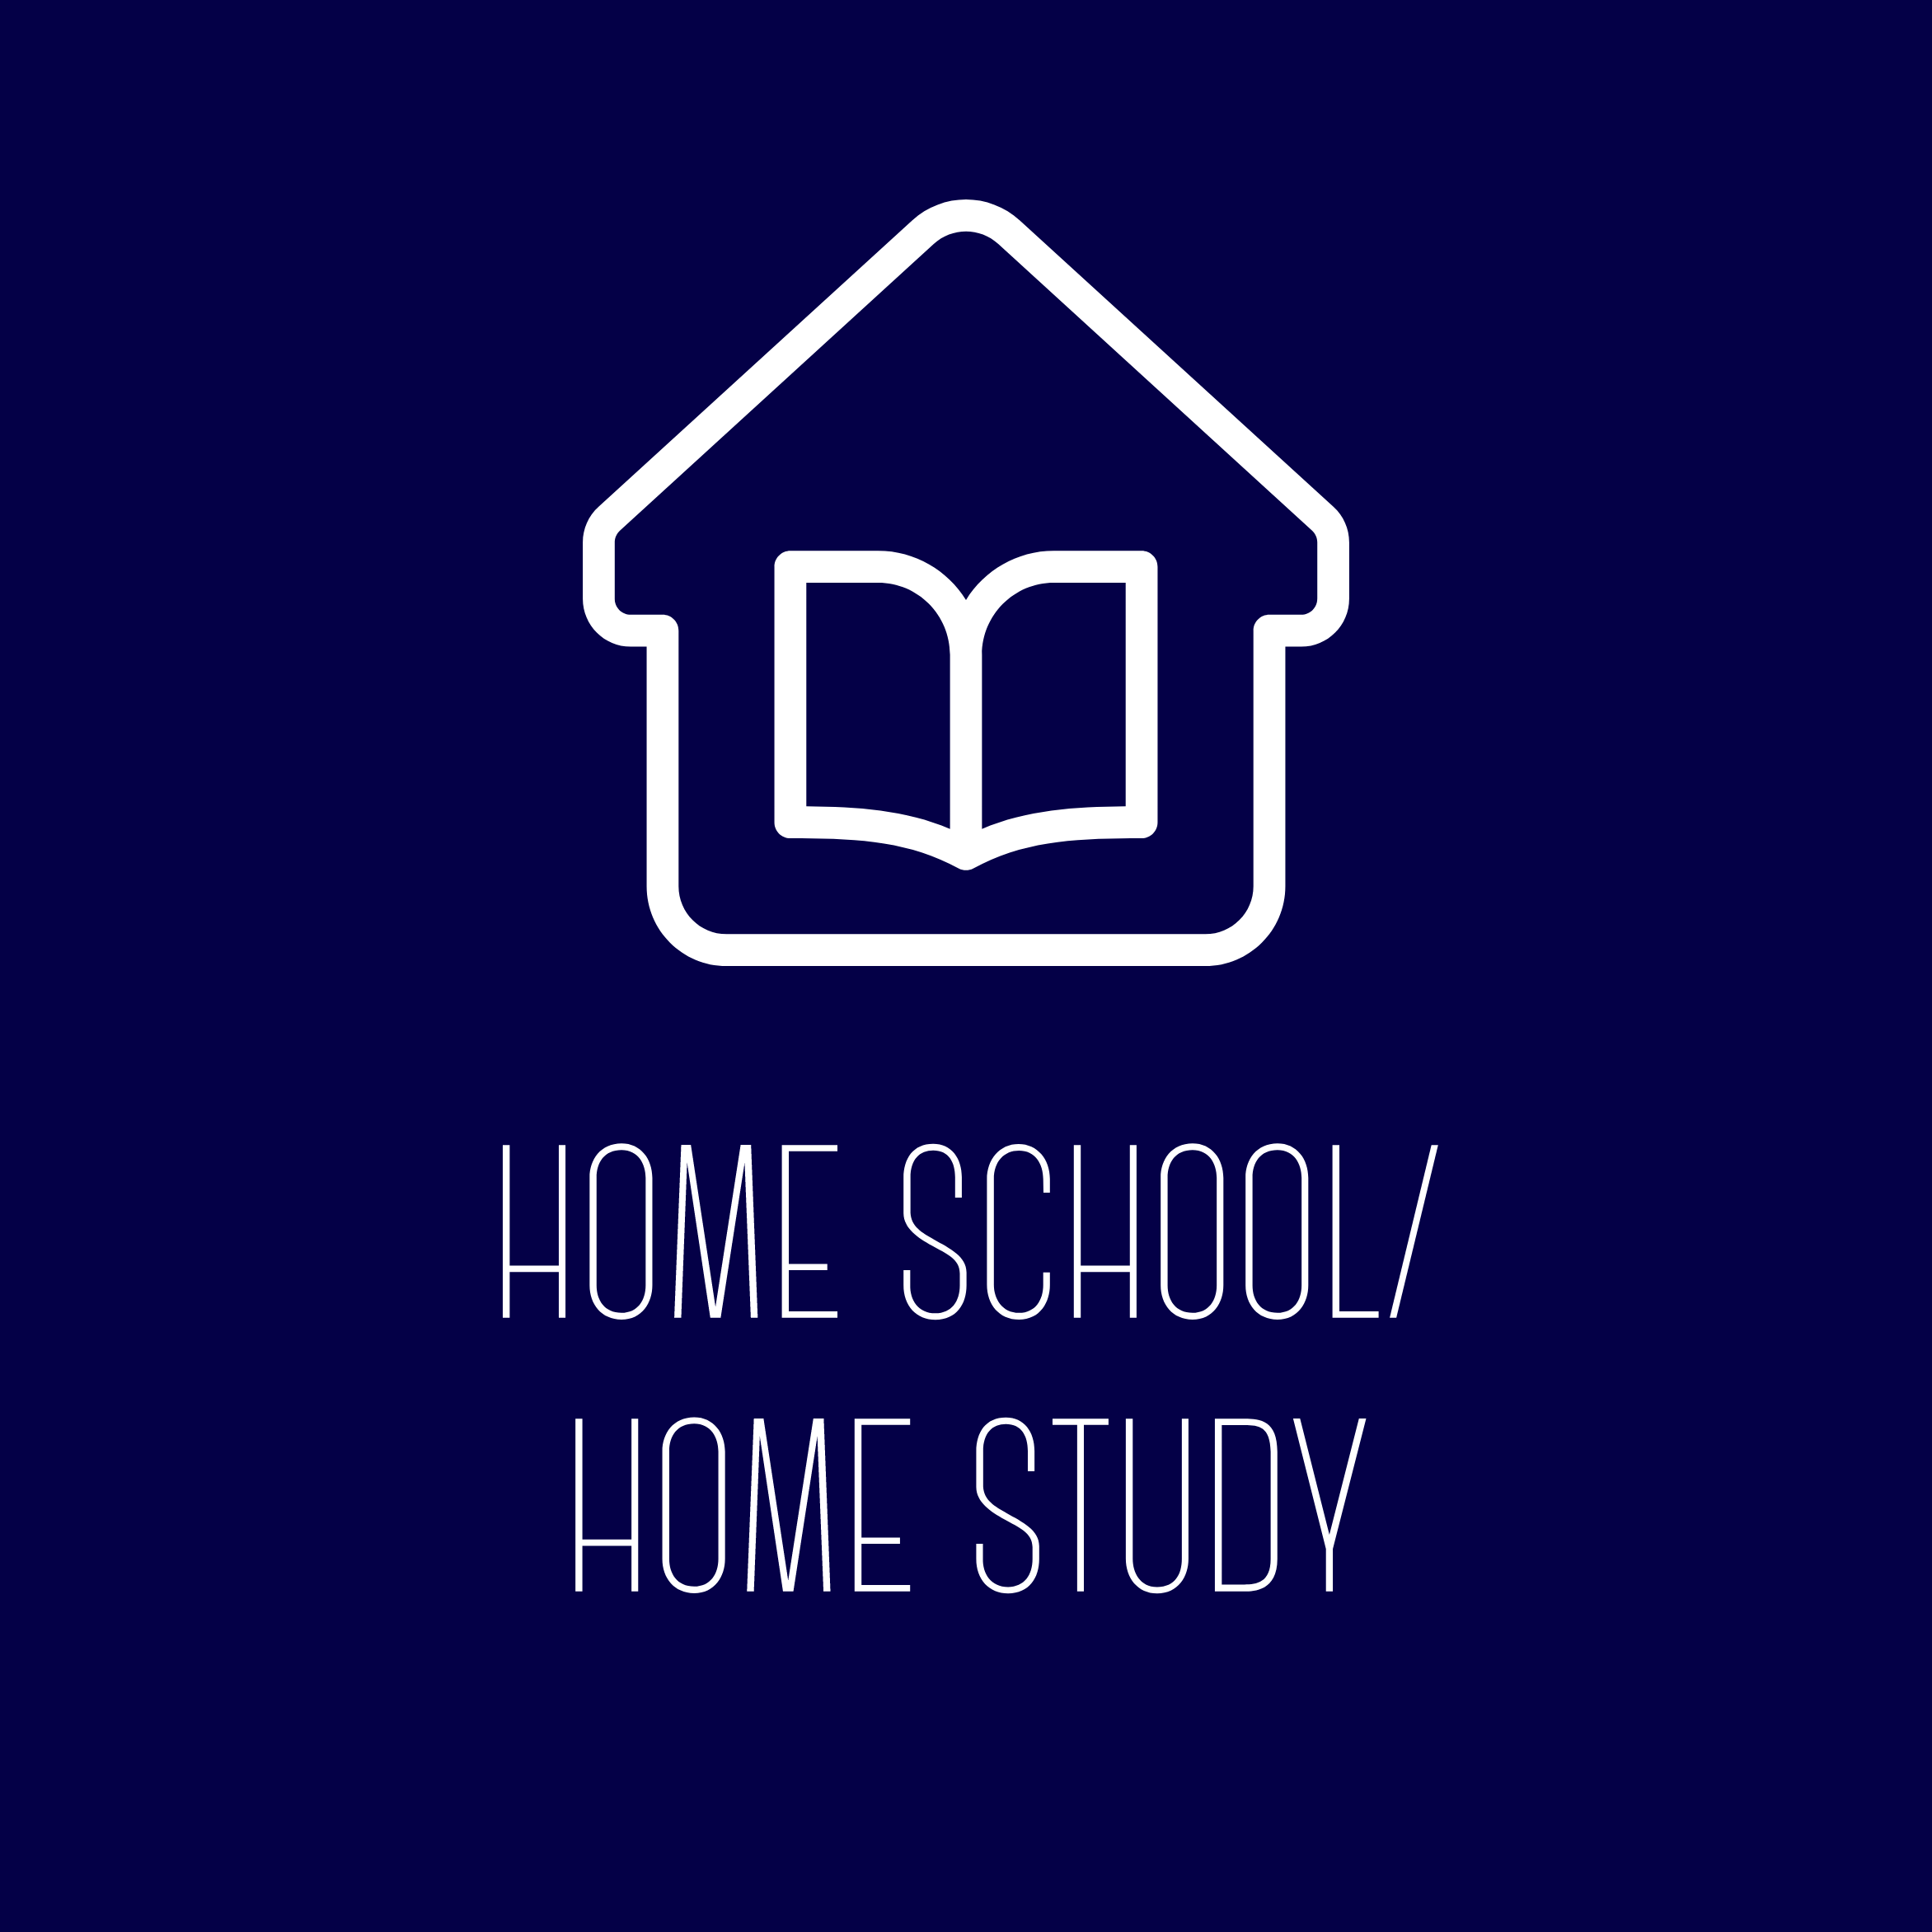 Home School/Home Study